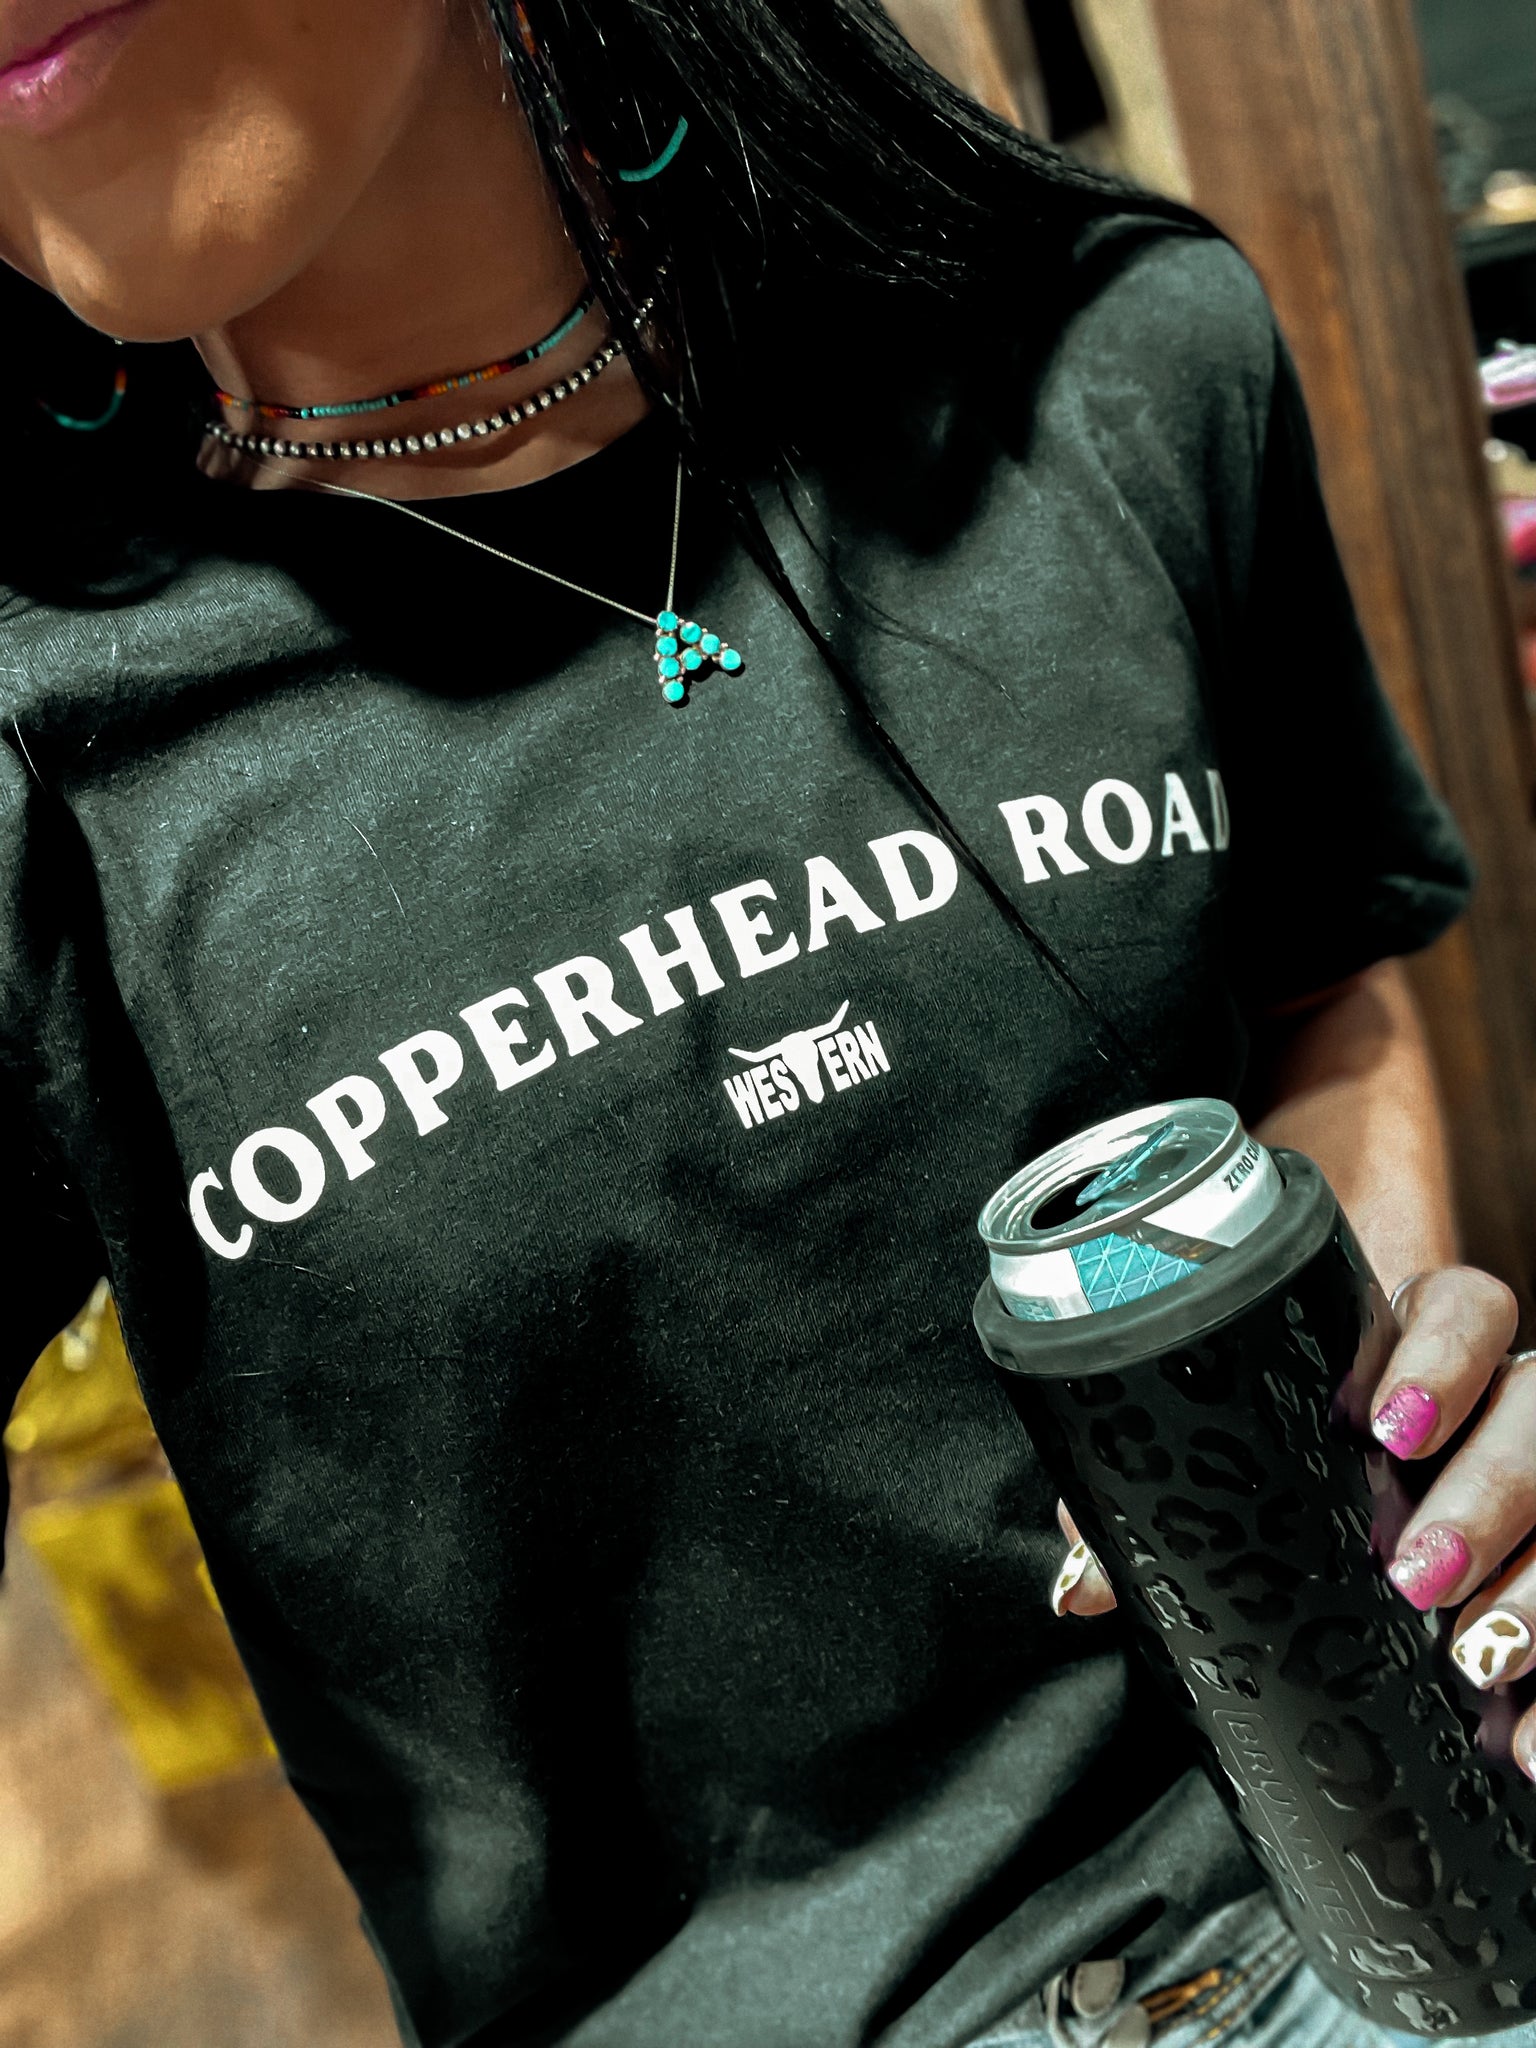 Copperhead Road